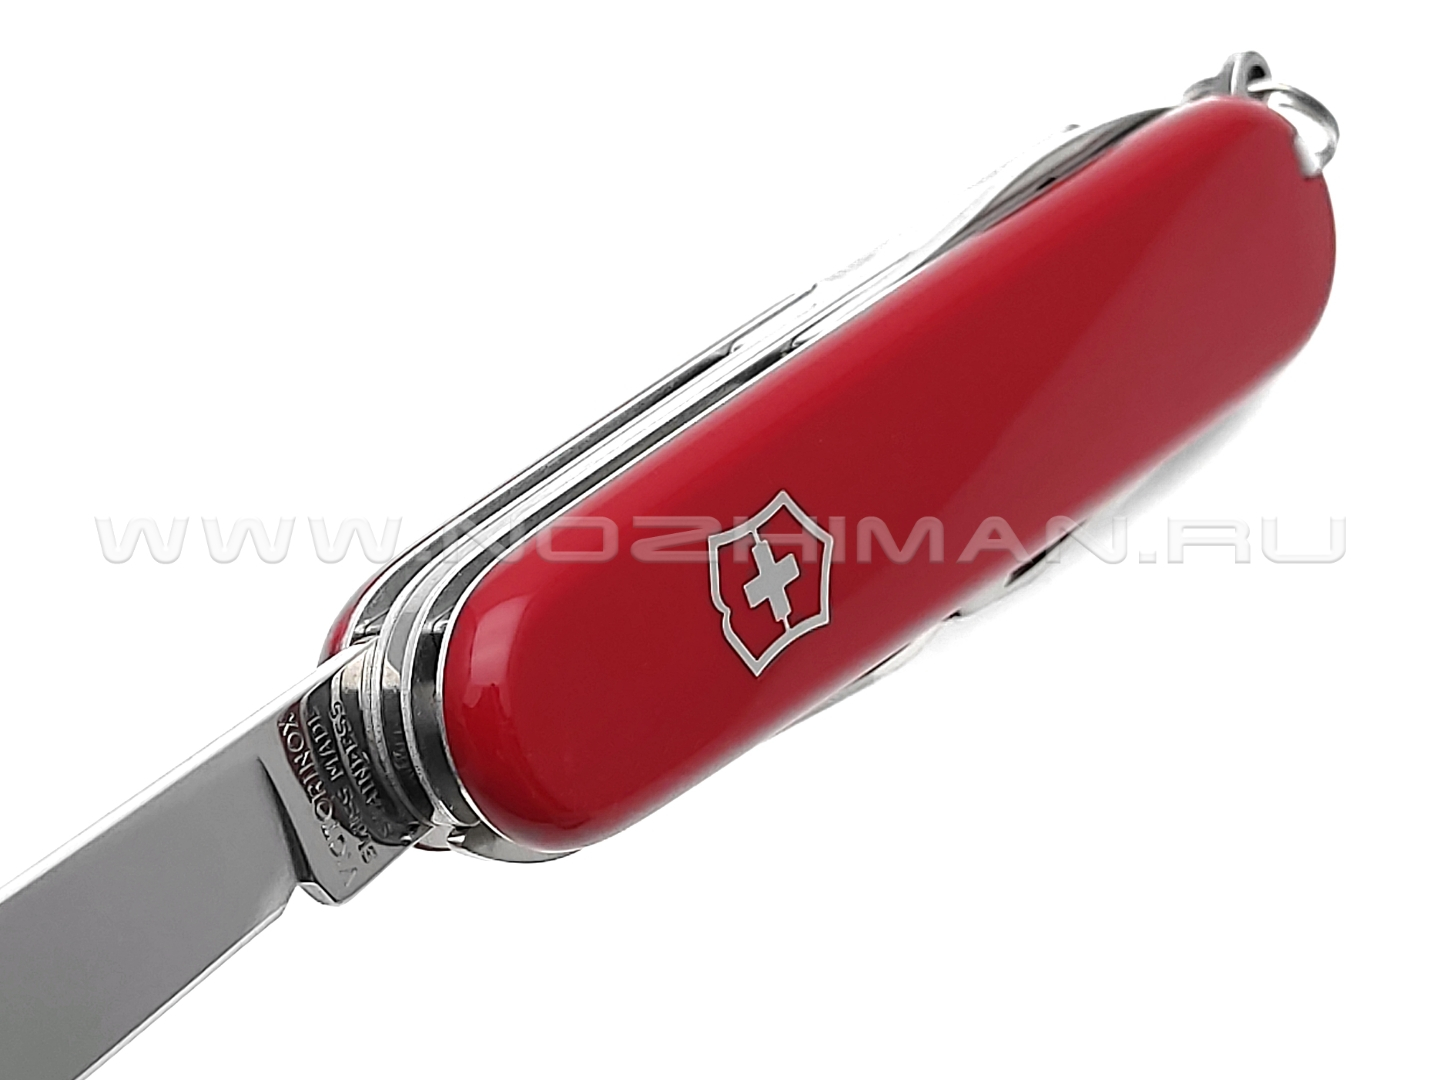 Швейцарский нож Victorinox 1.4613 Hiker Red (13 функций)